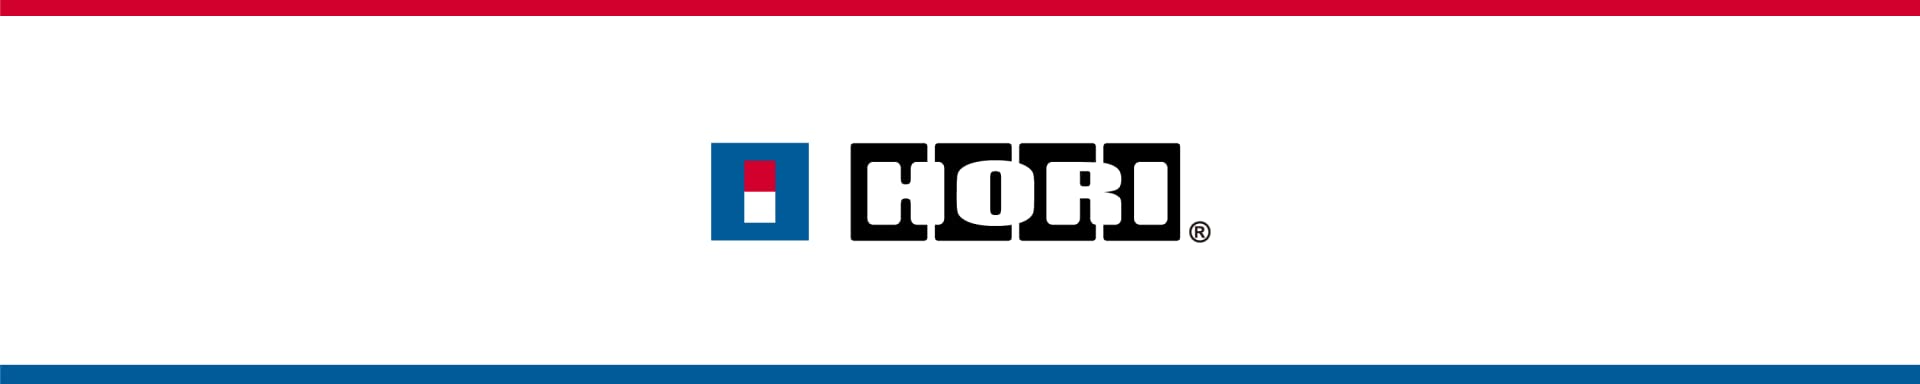 Logo Hori